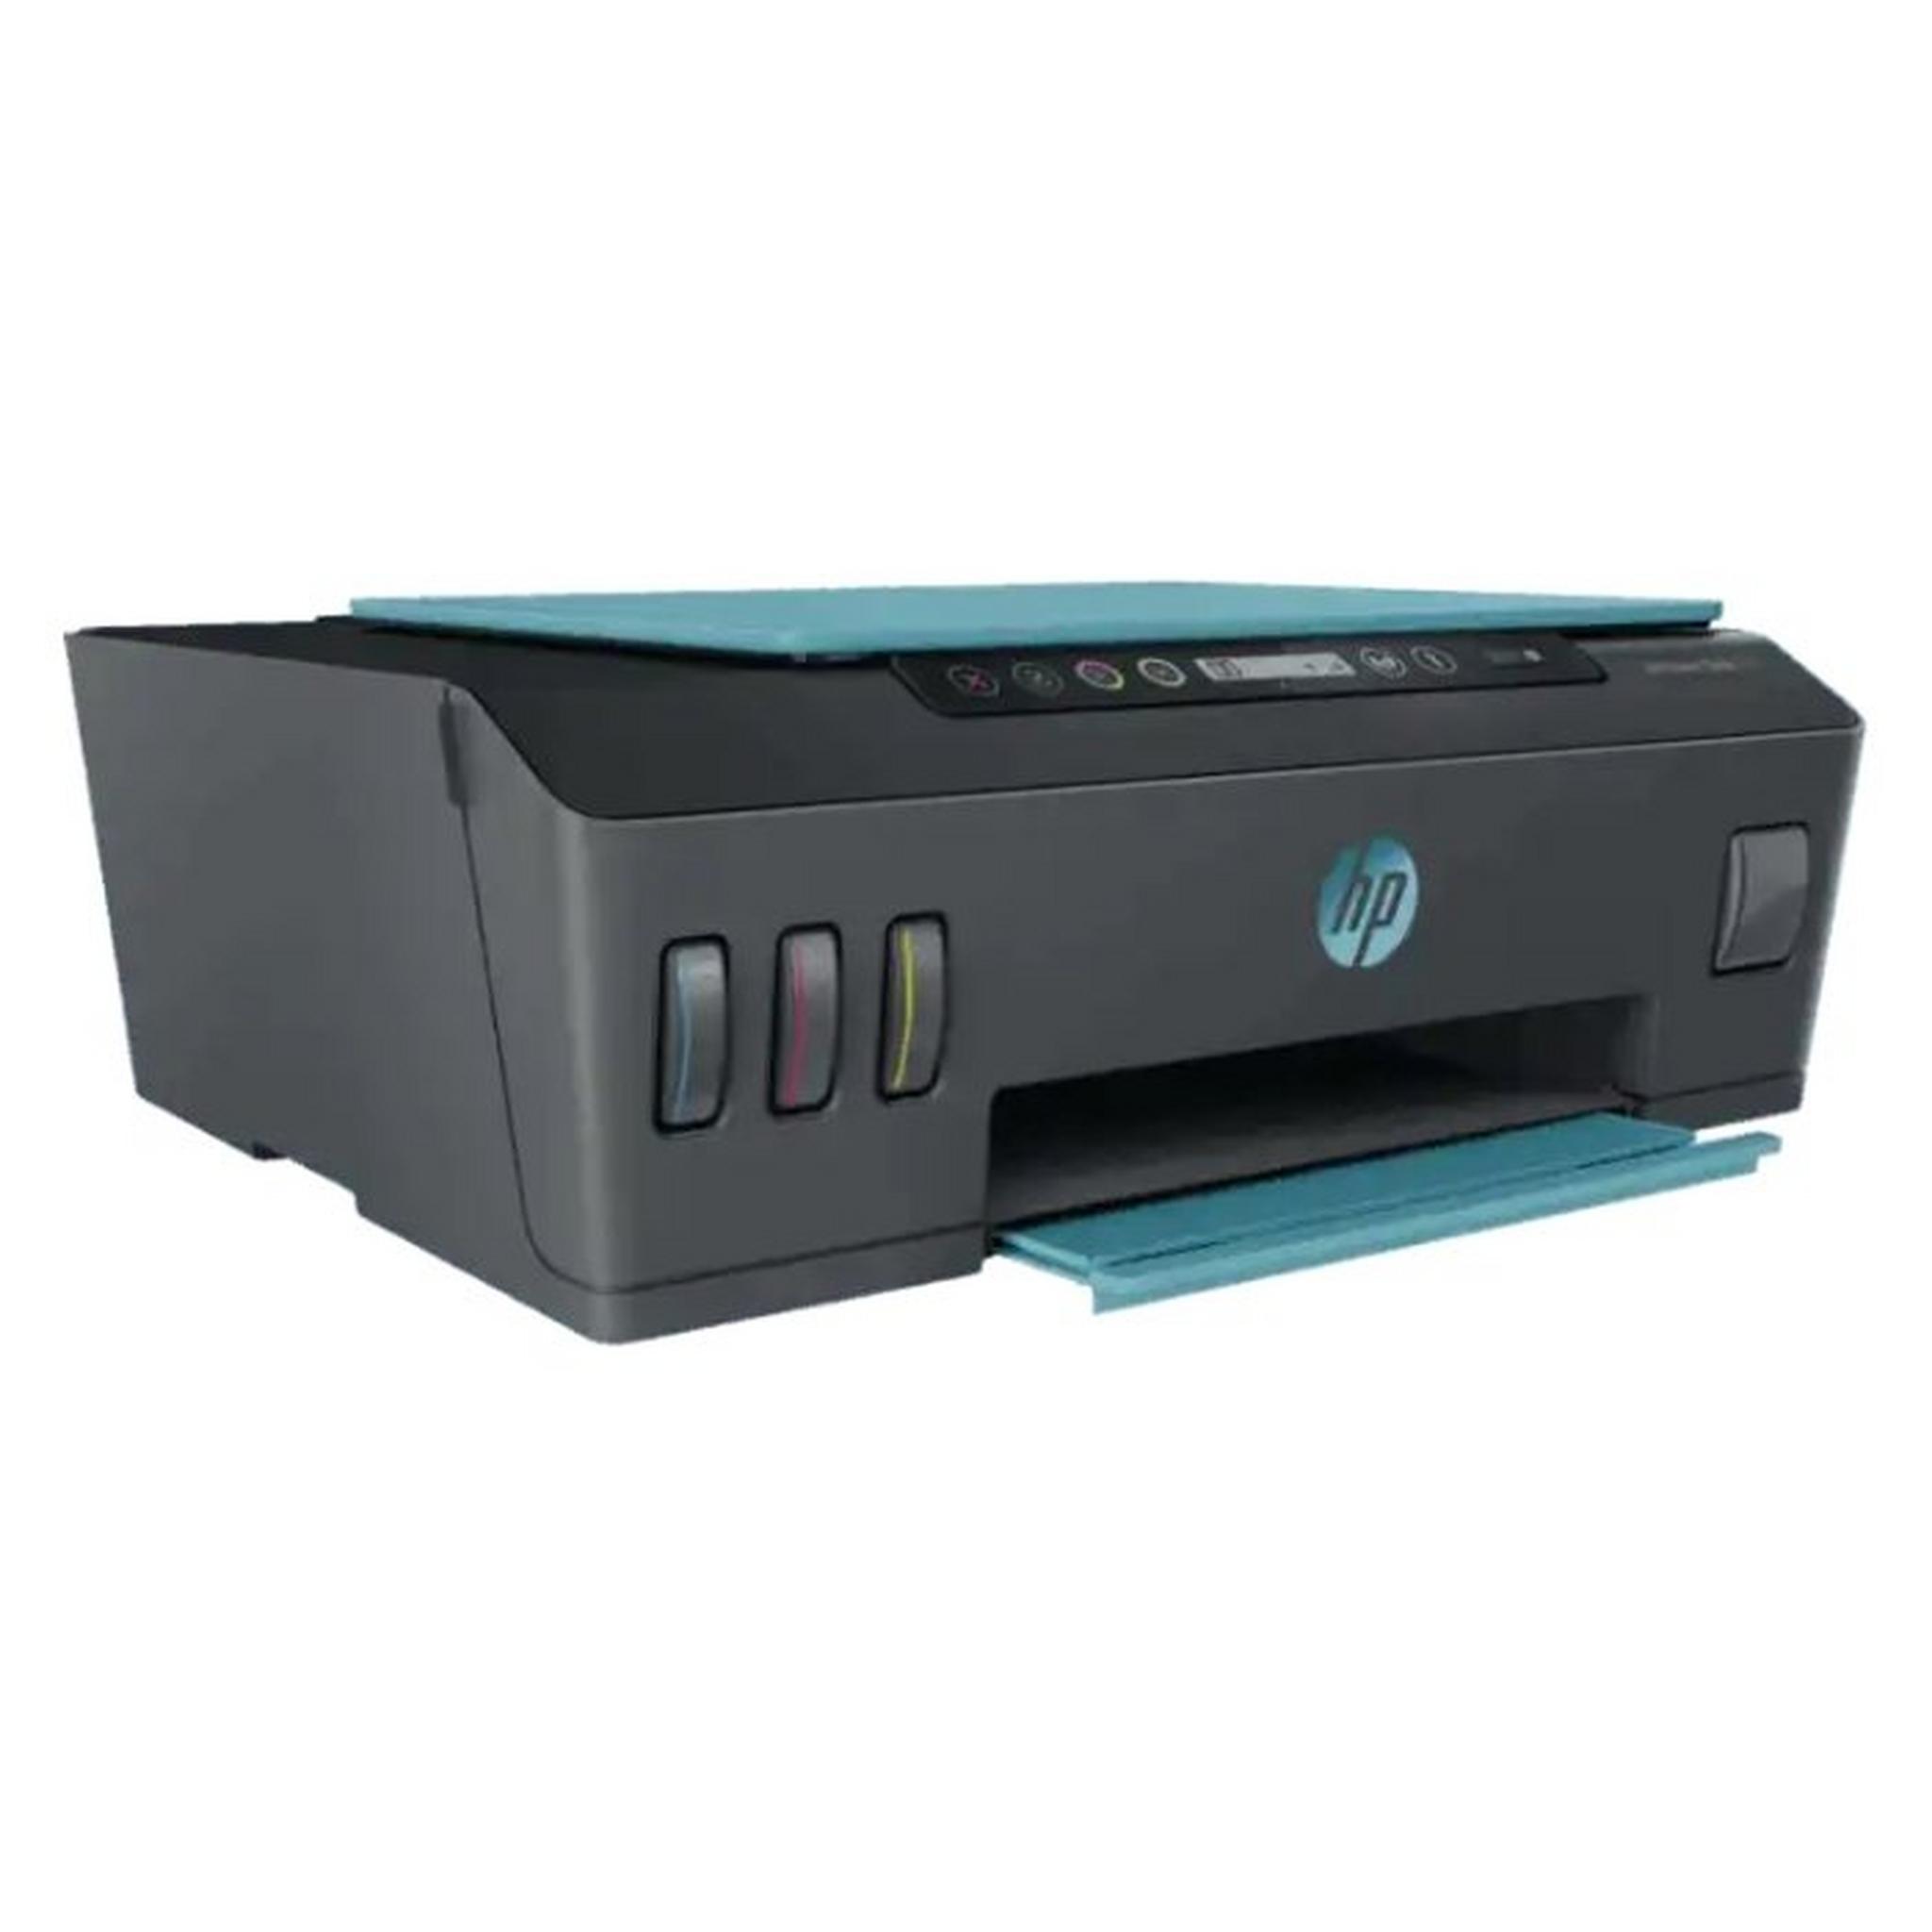 HP Smart Tank 516 Wireless All-in-One Printer - Black